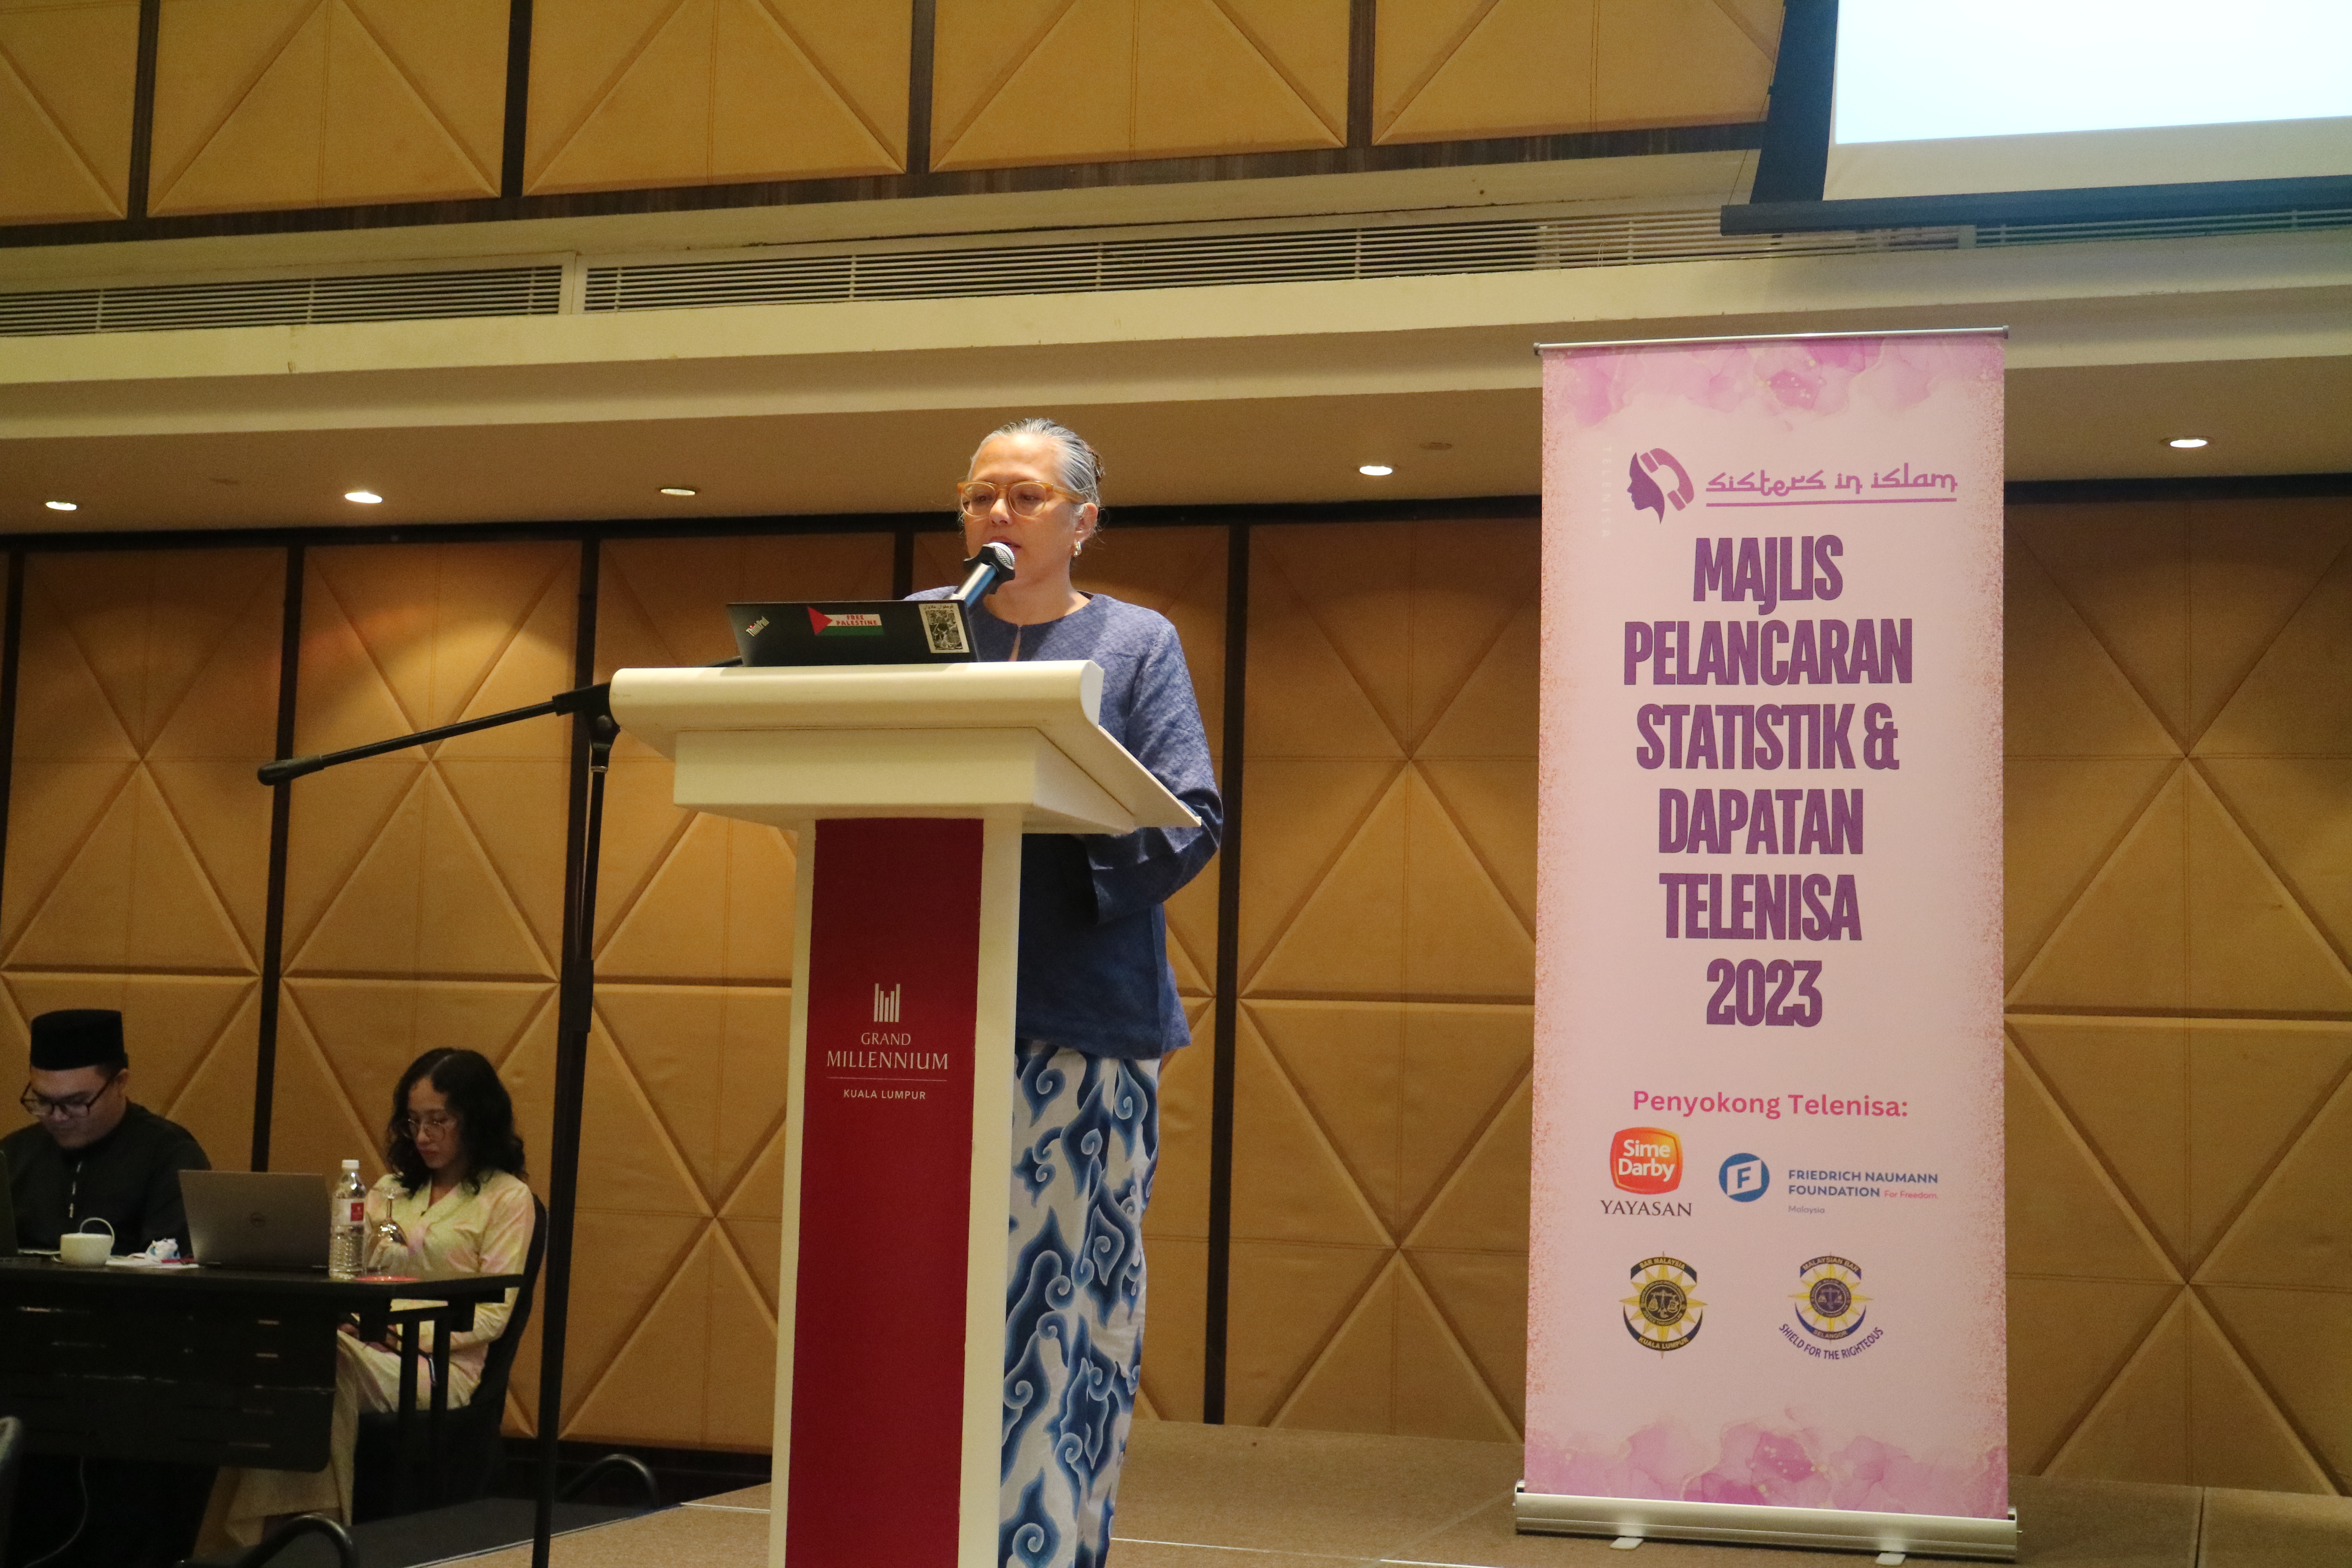 Rozana Isa, Executive Director of Sisters in Islam, commenced the launching event at Grand Millenium Hotel, Bukit Bintang, Kuala Lumpur